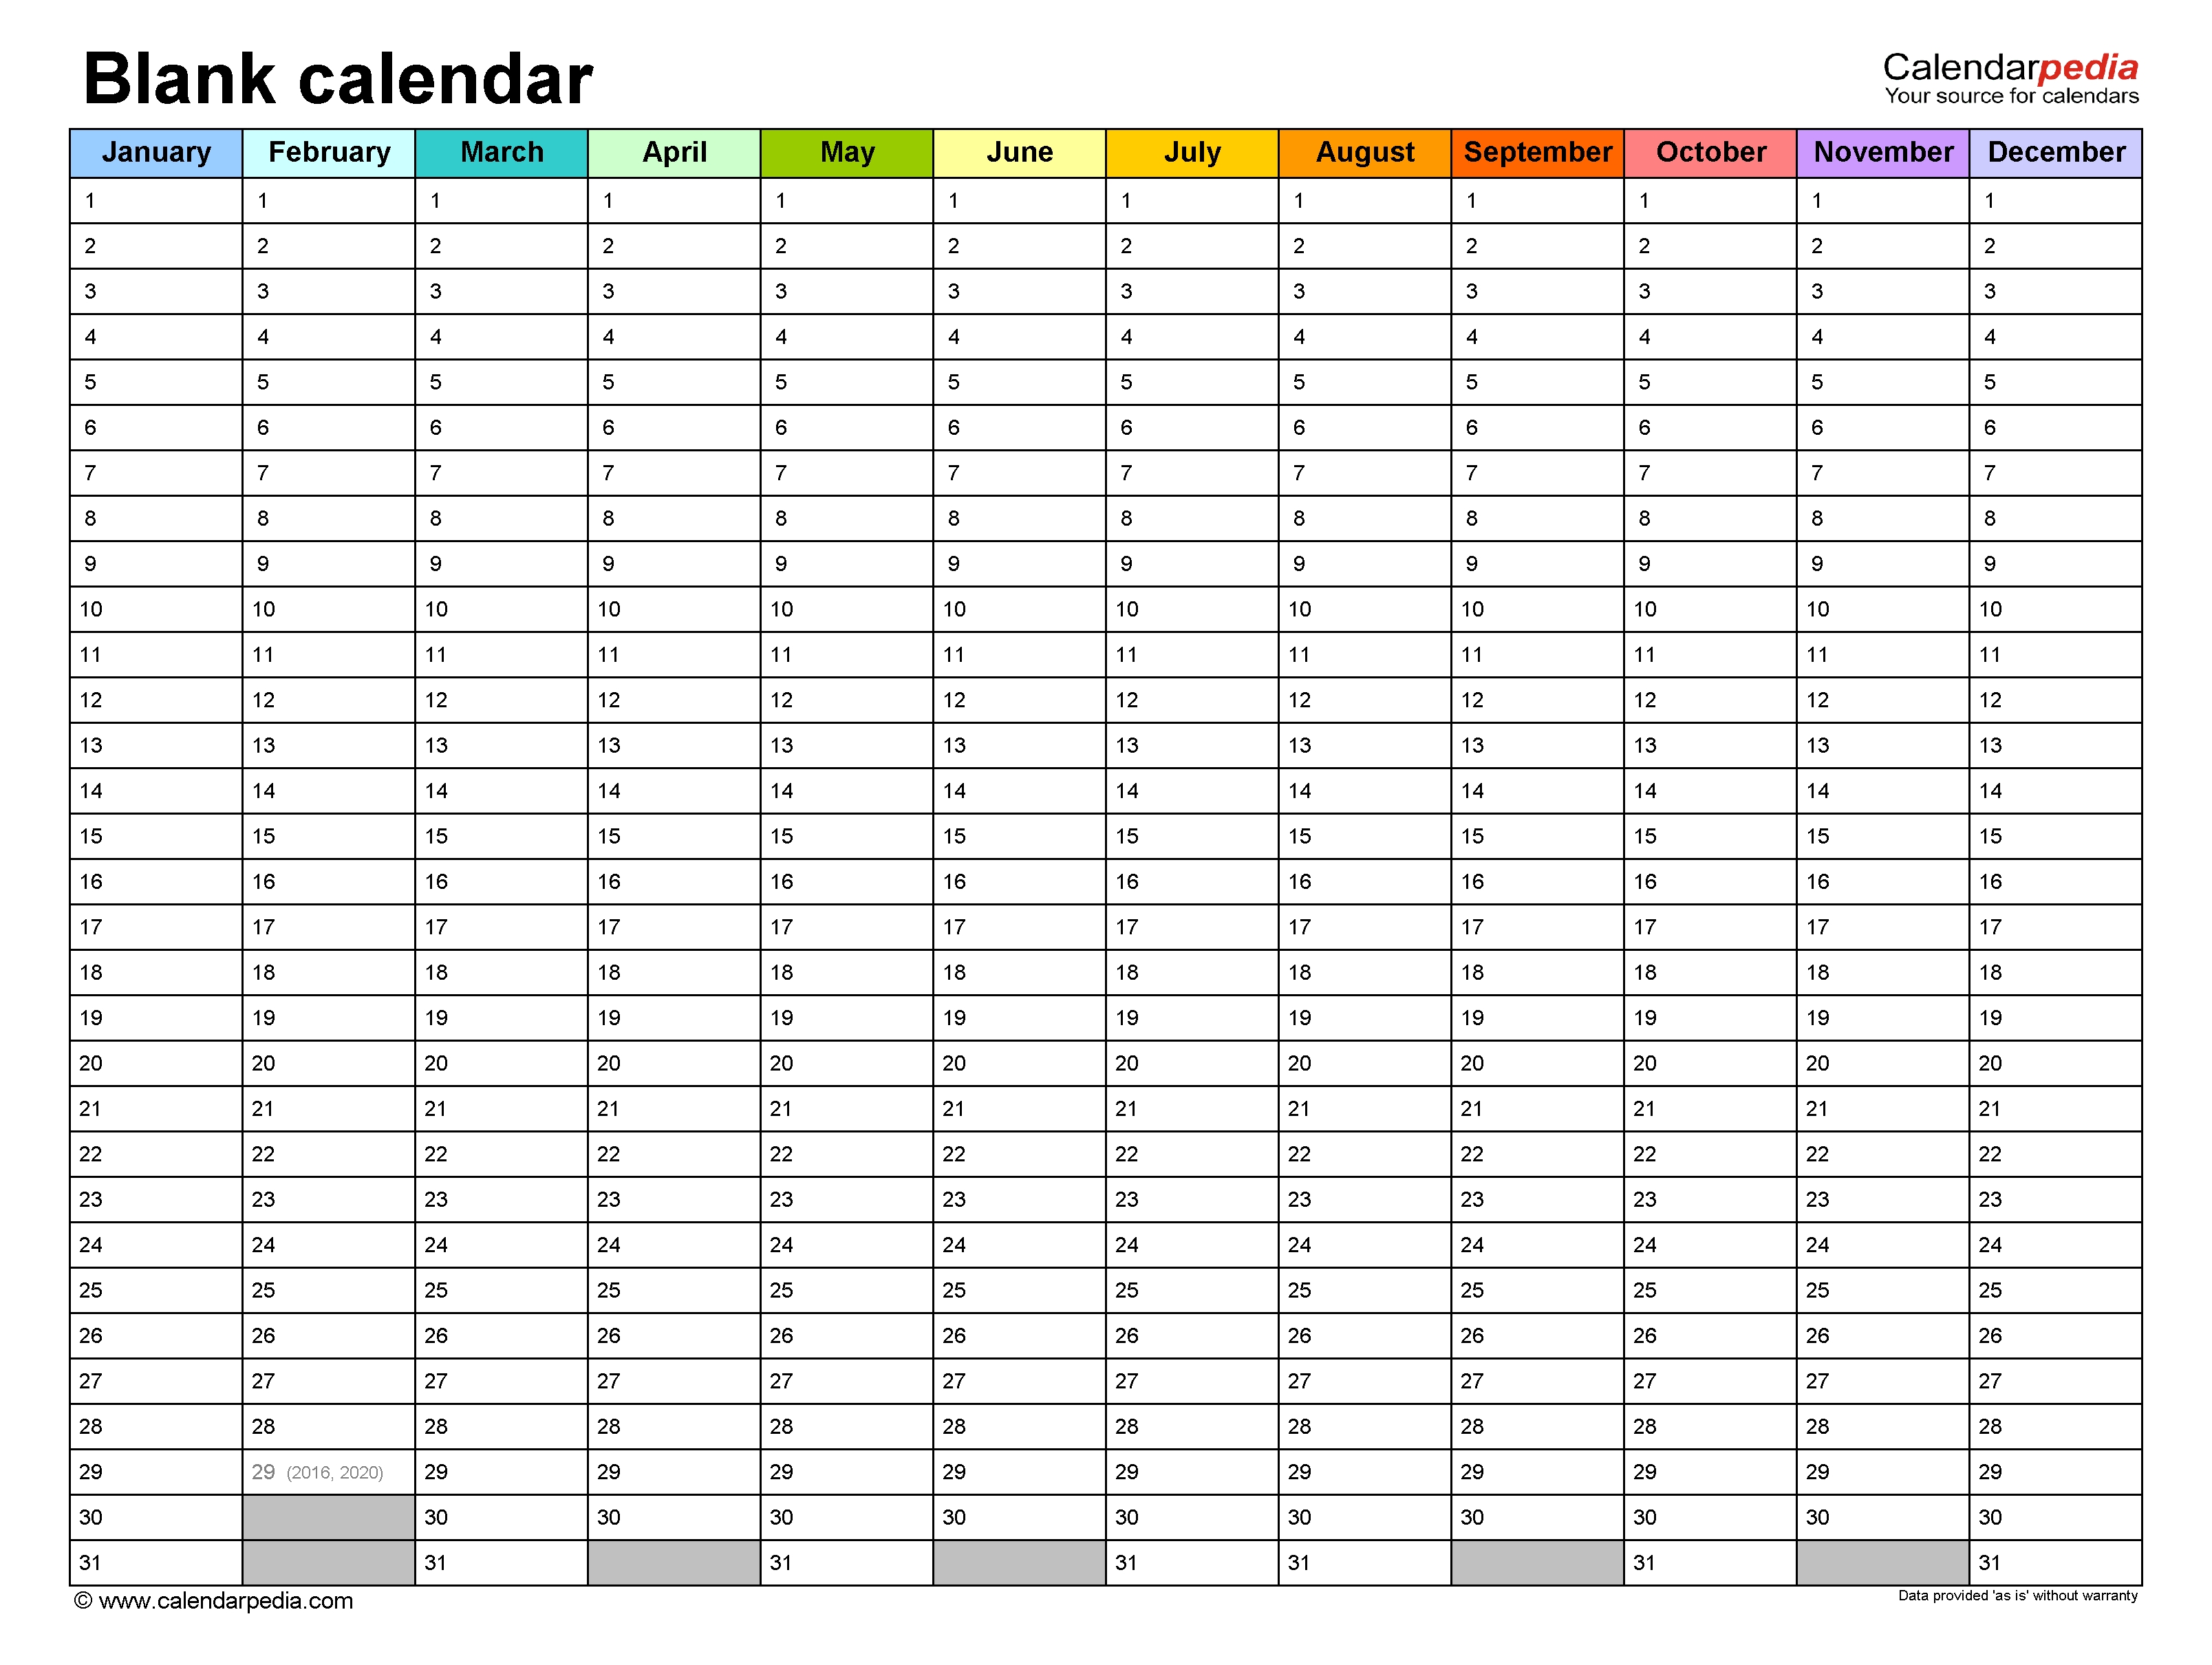 Blank Calendars - Free Printable Microsoft Word Templates-Blank Calendar Template No Dates